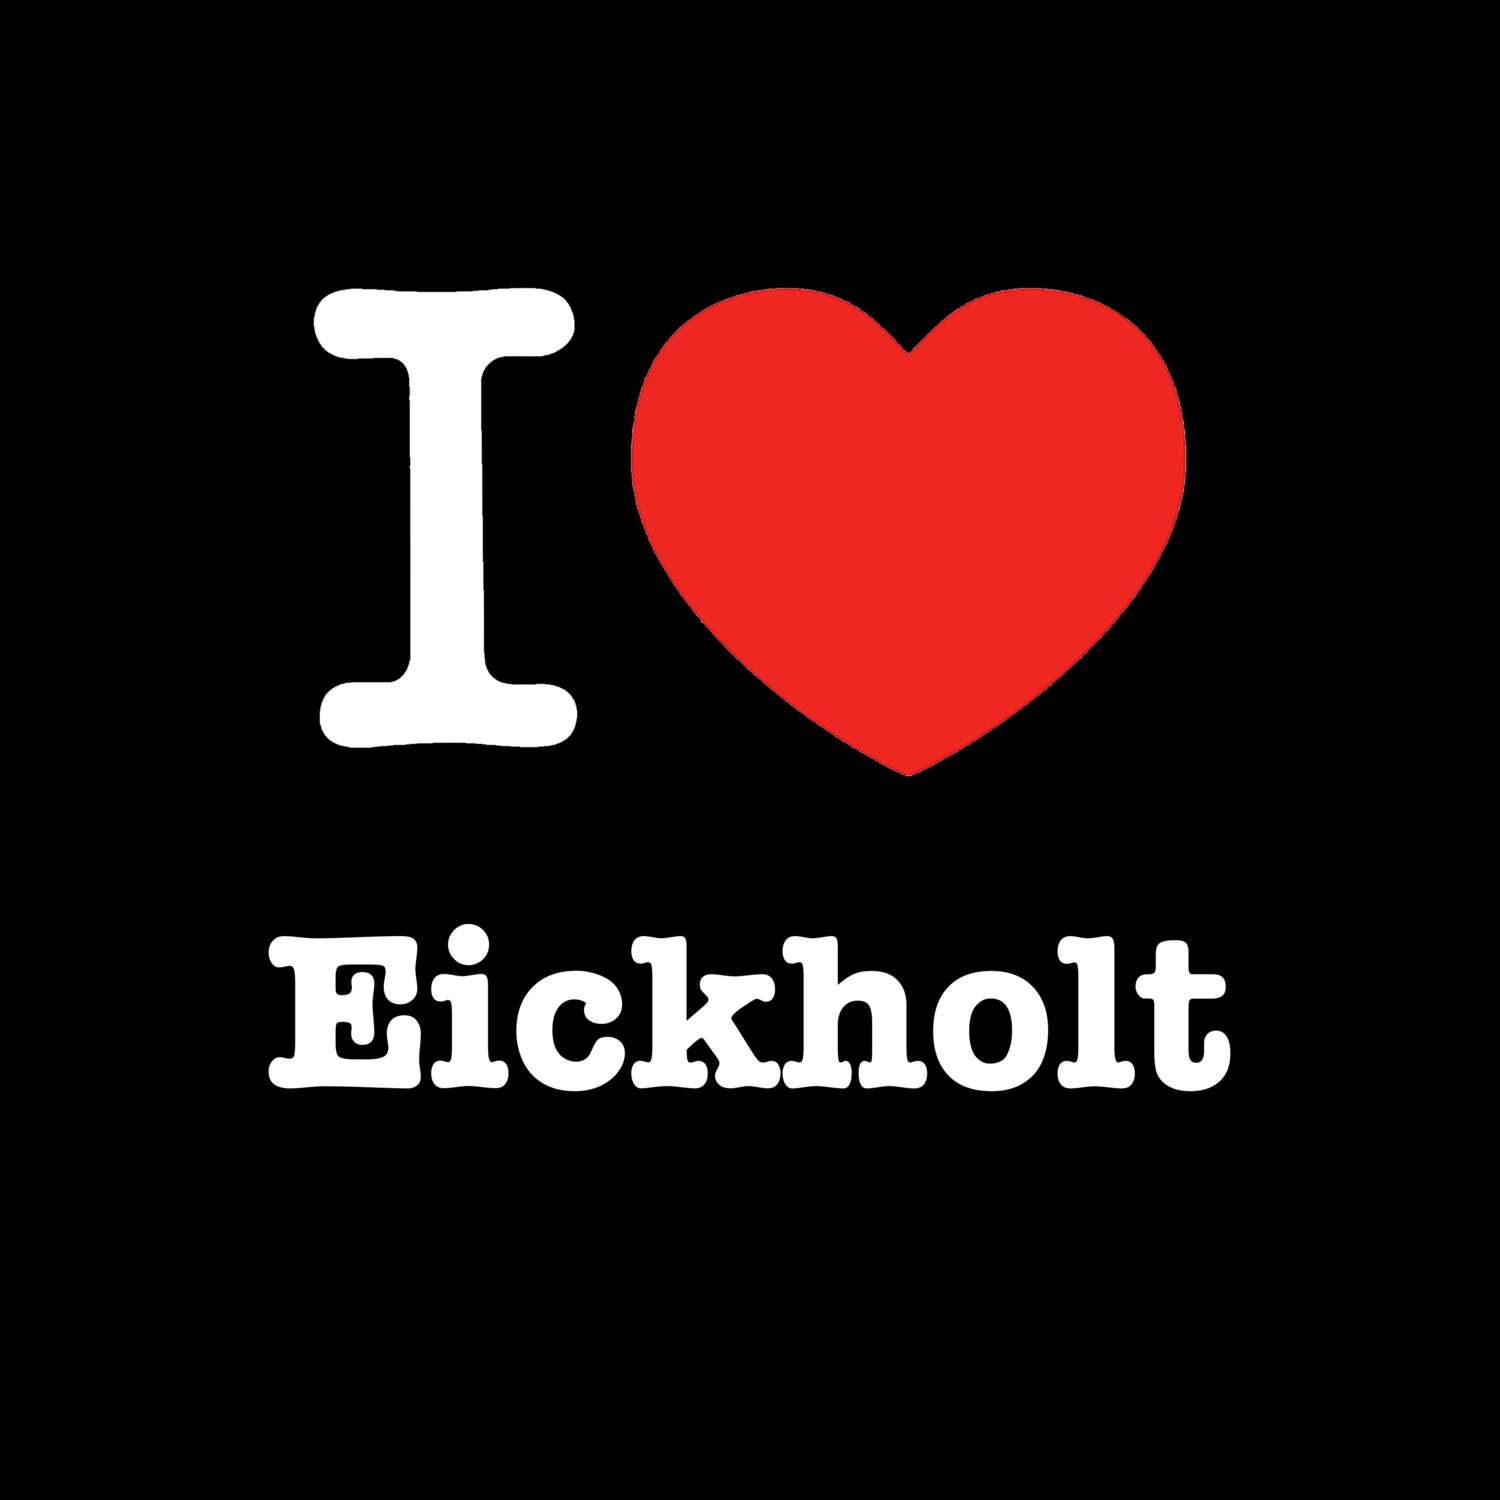 Eickholt T-Shirt »I love«